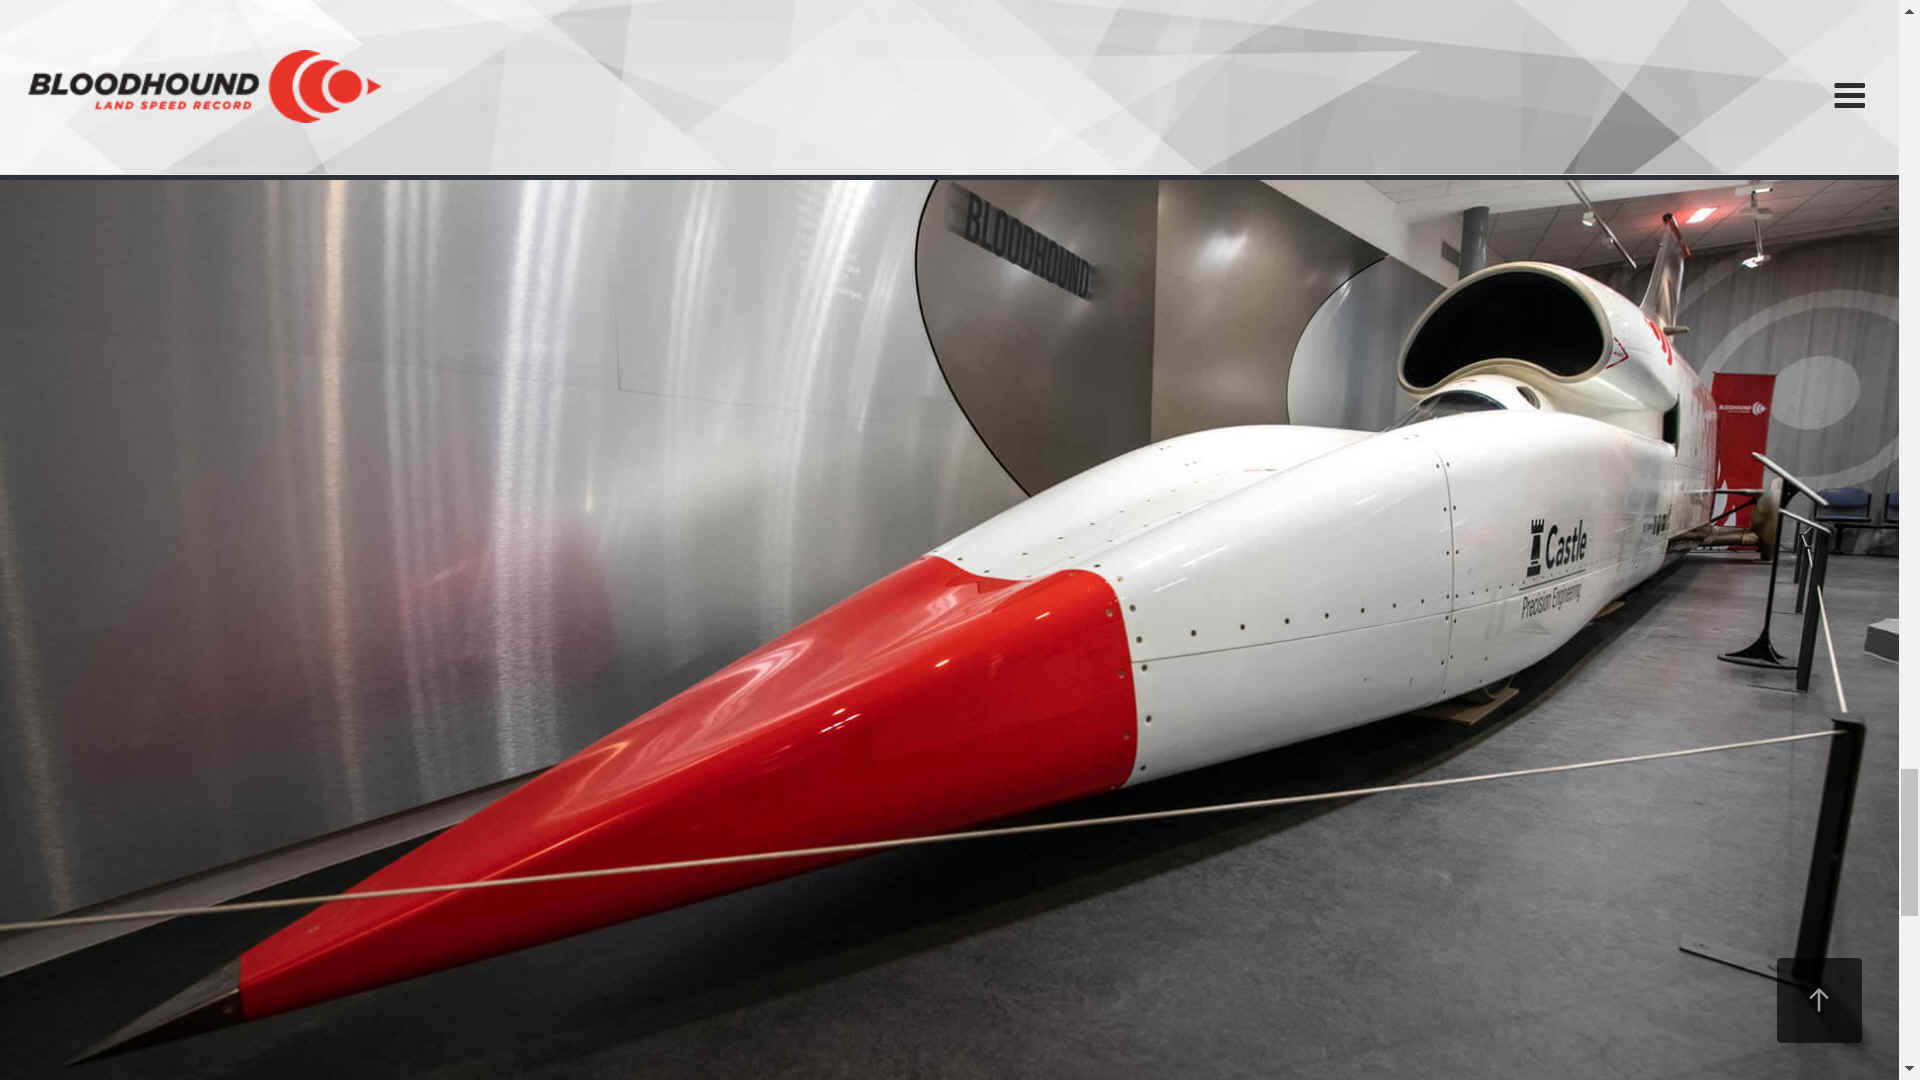 Bloodhound land speed record jet hydrogen peroxide rocket car for sale